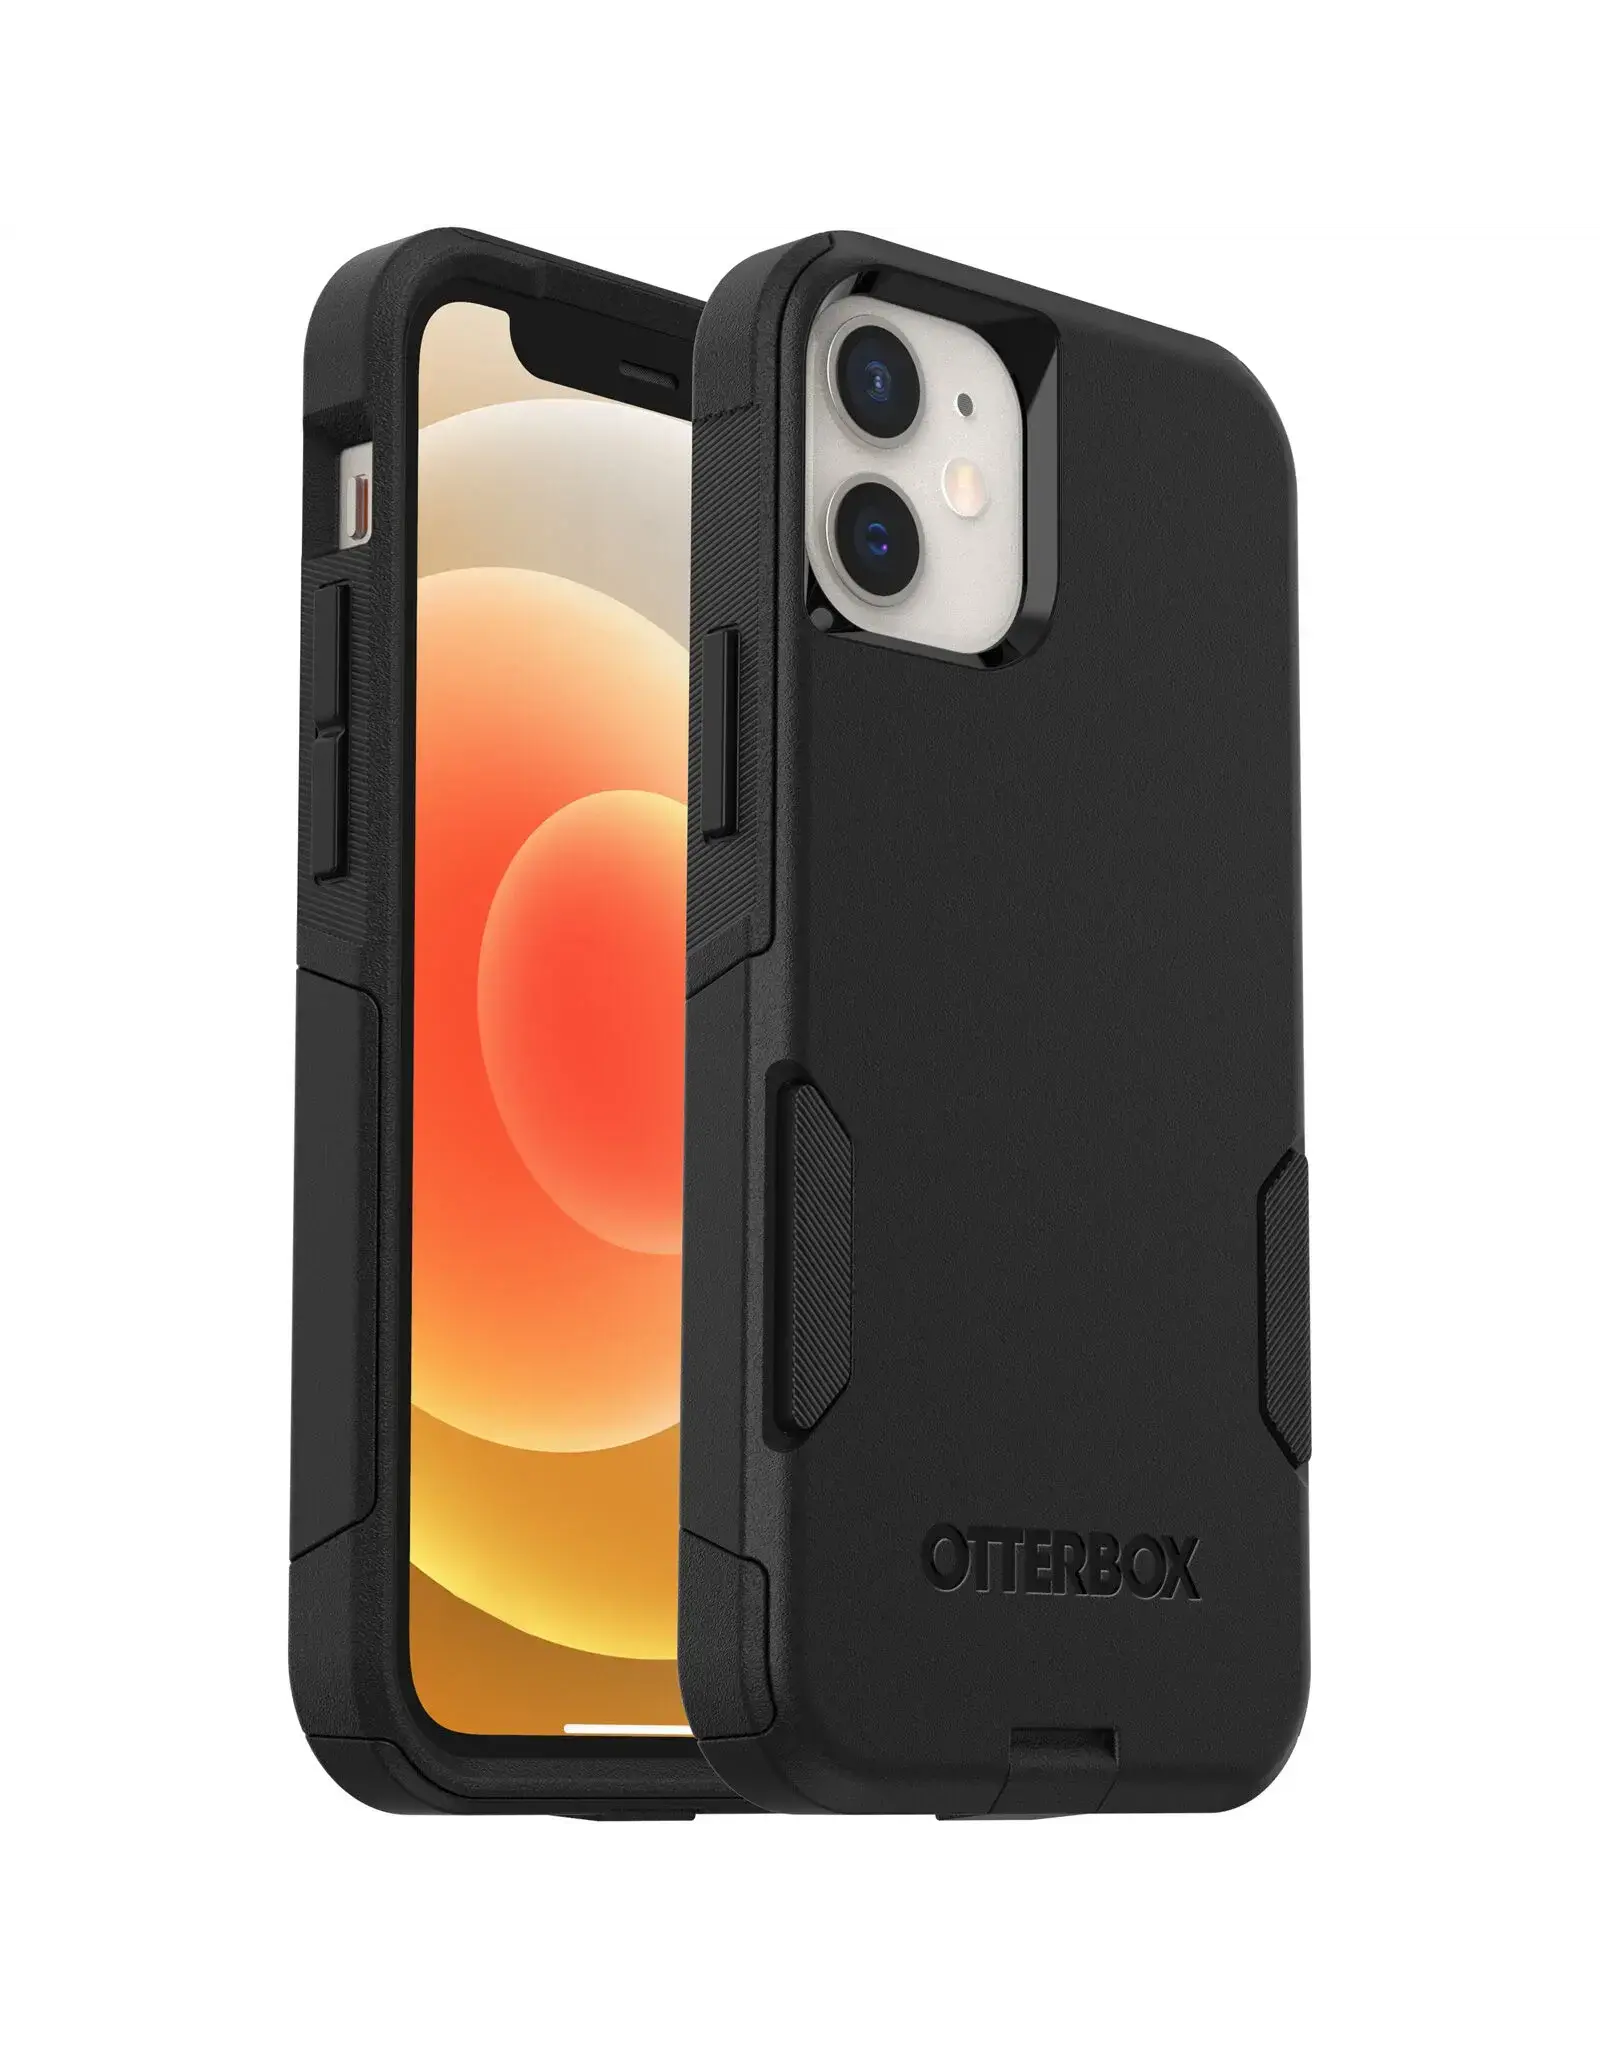 Otterbox OtterBox Commuter Case suits iPhone 12 mini - Black